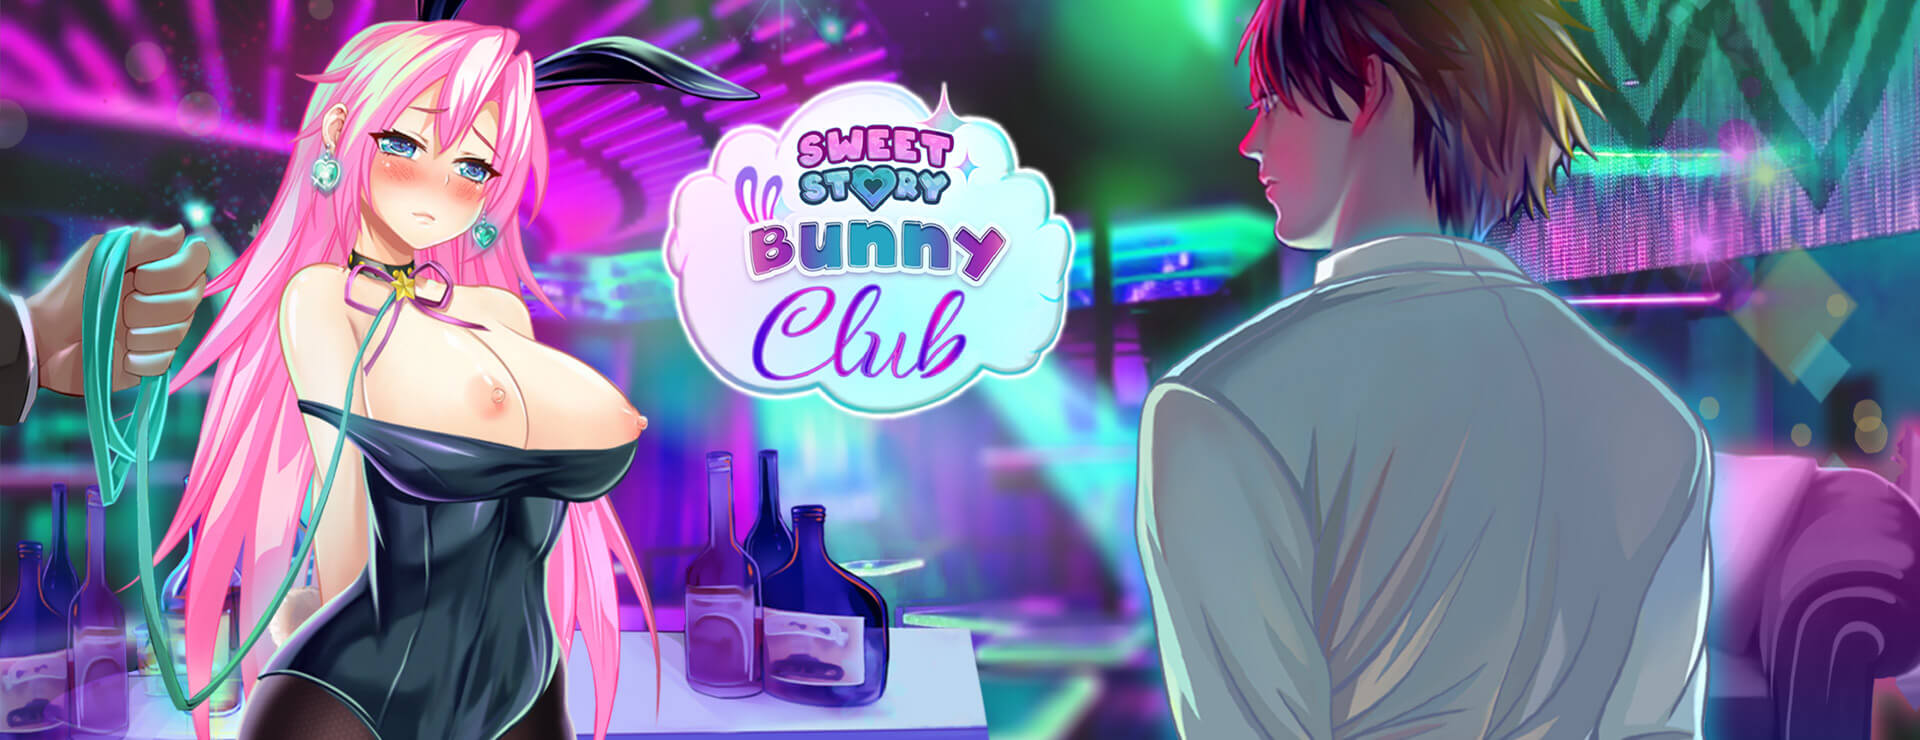 Sweet Story Bunny Club - カジュアル ゲーム